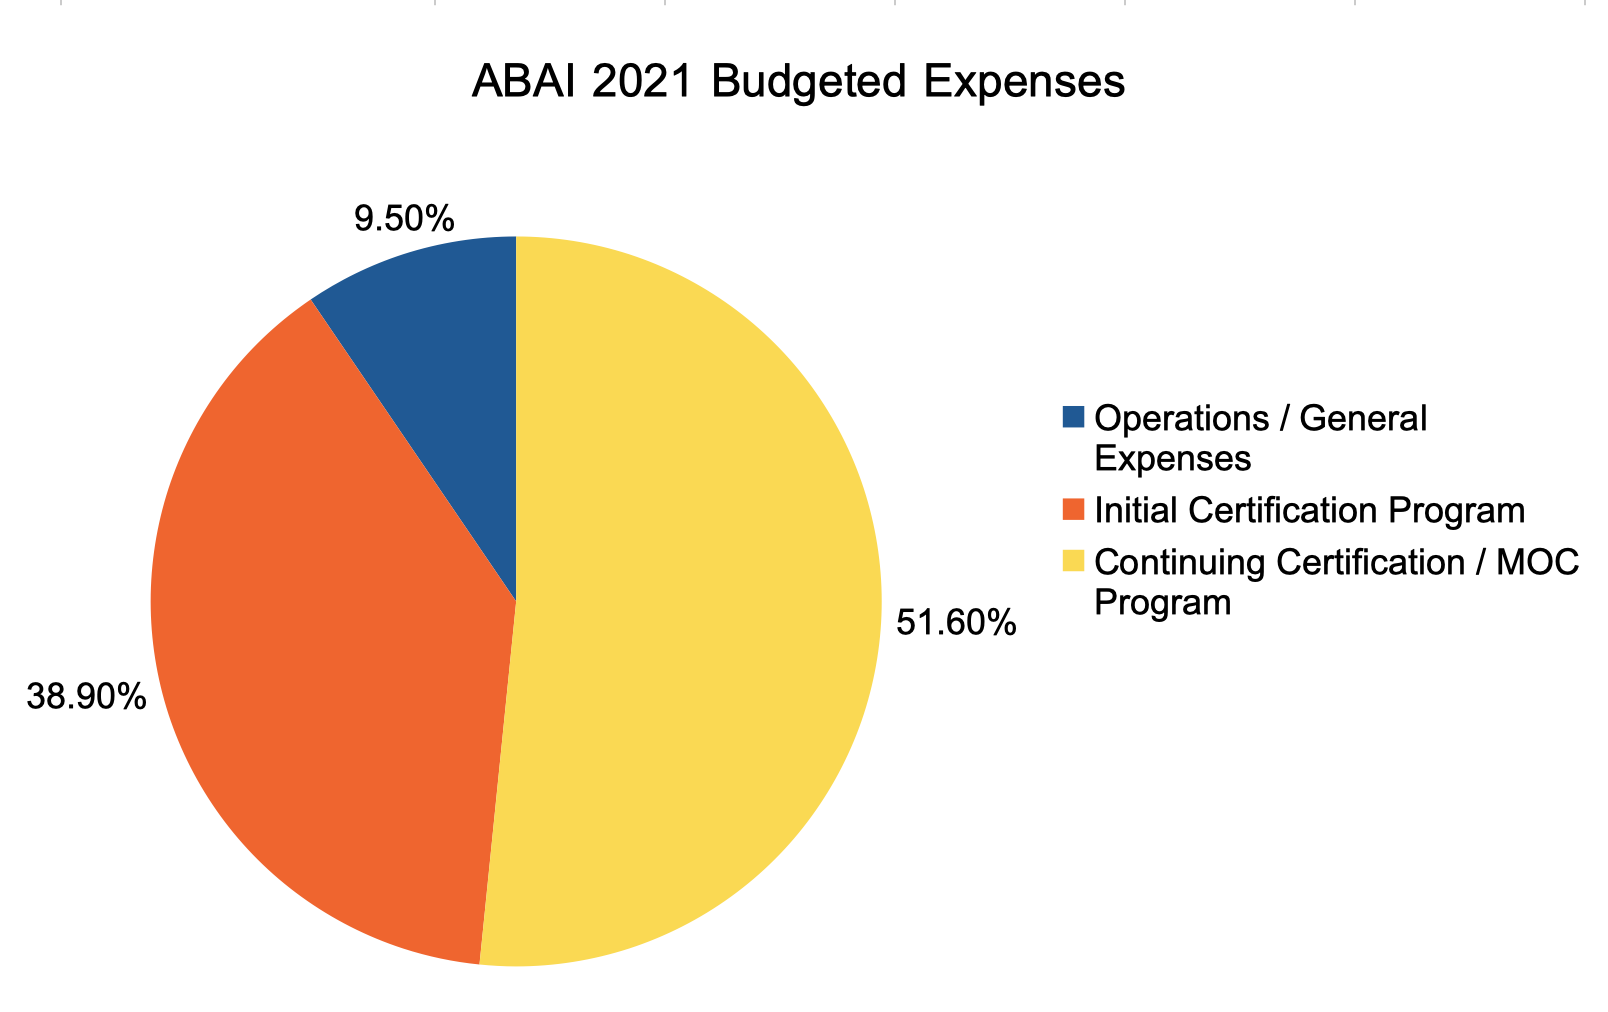 ABAI 2019 Budgeted Expenses